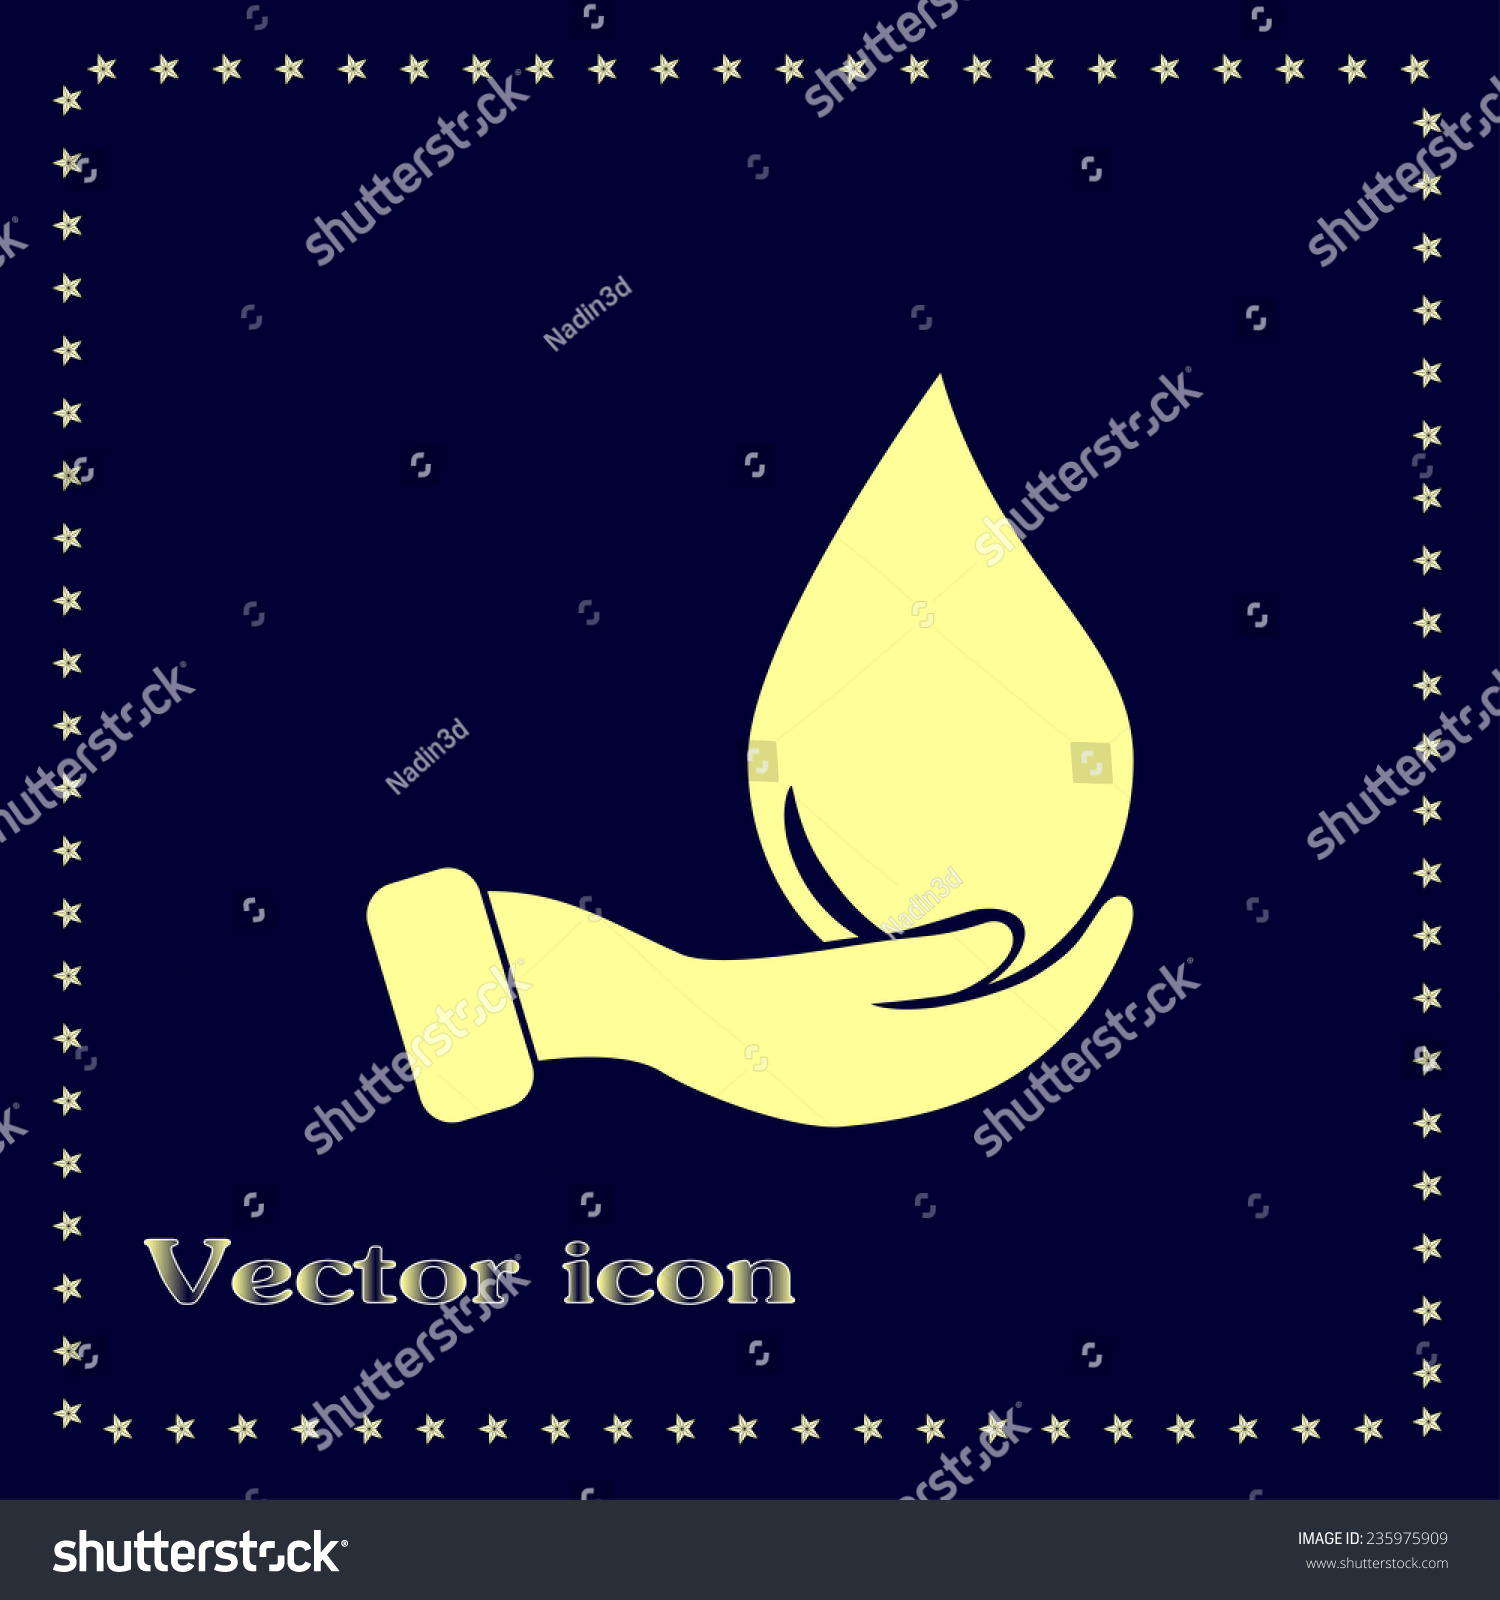 Drop Hand Vector Icon Stock Vector (Royalty Free) 235975909 | Shutterstock